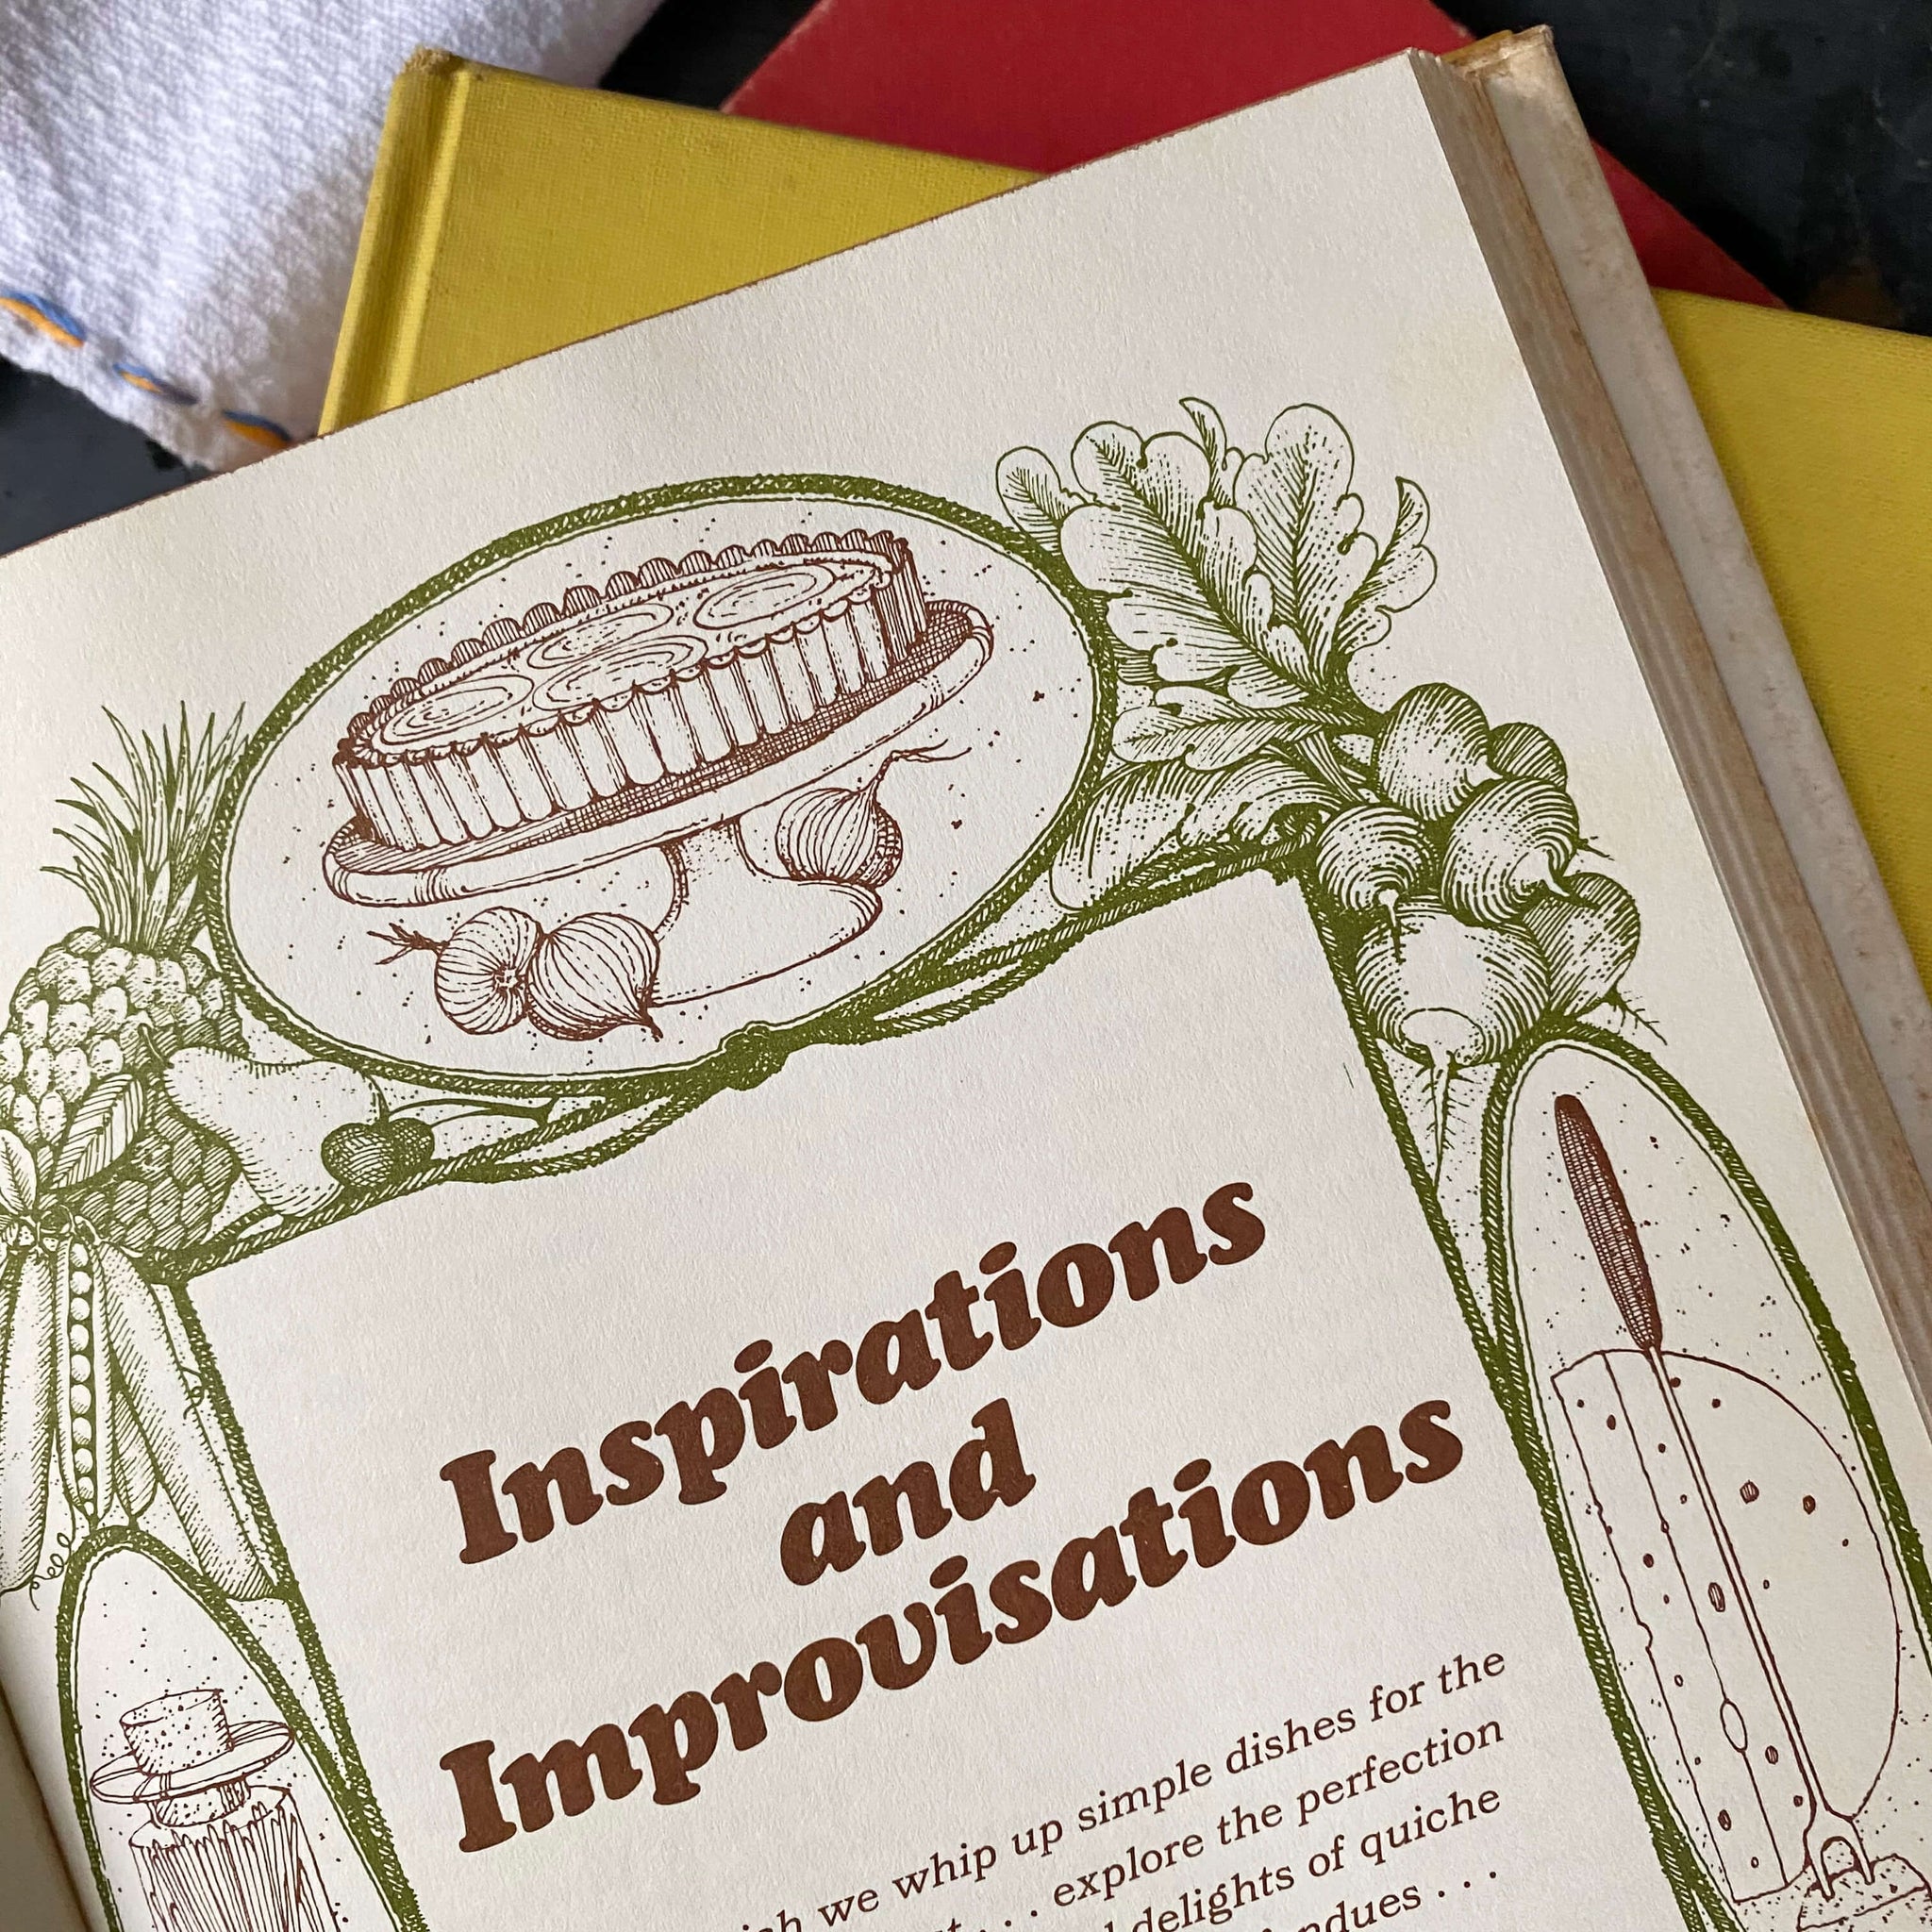 Beard on Food by James Beard - 1974 Edition Second Printing - Food Memoir and Cookbook